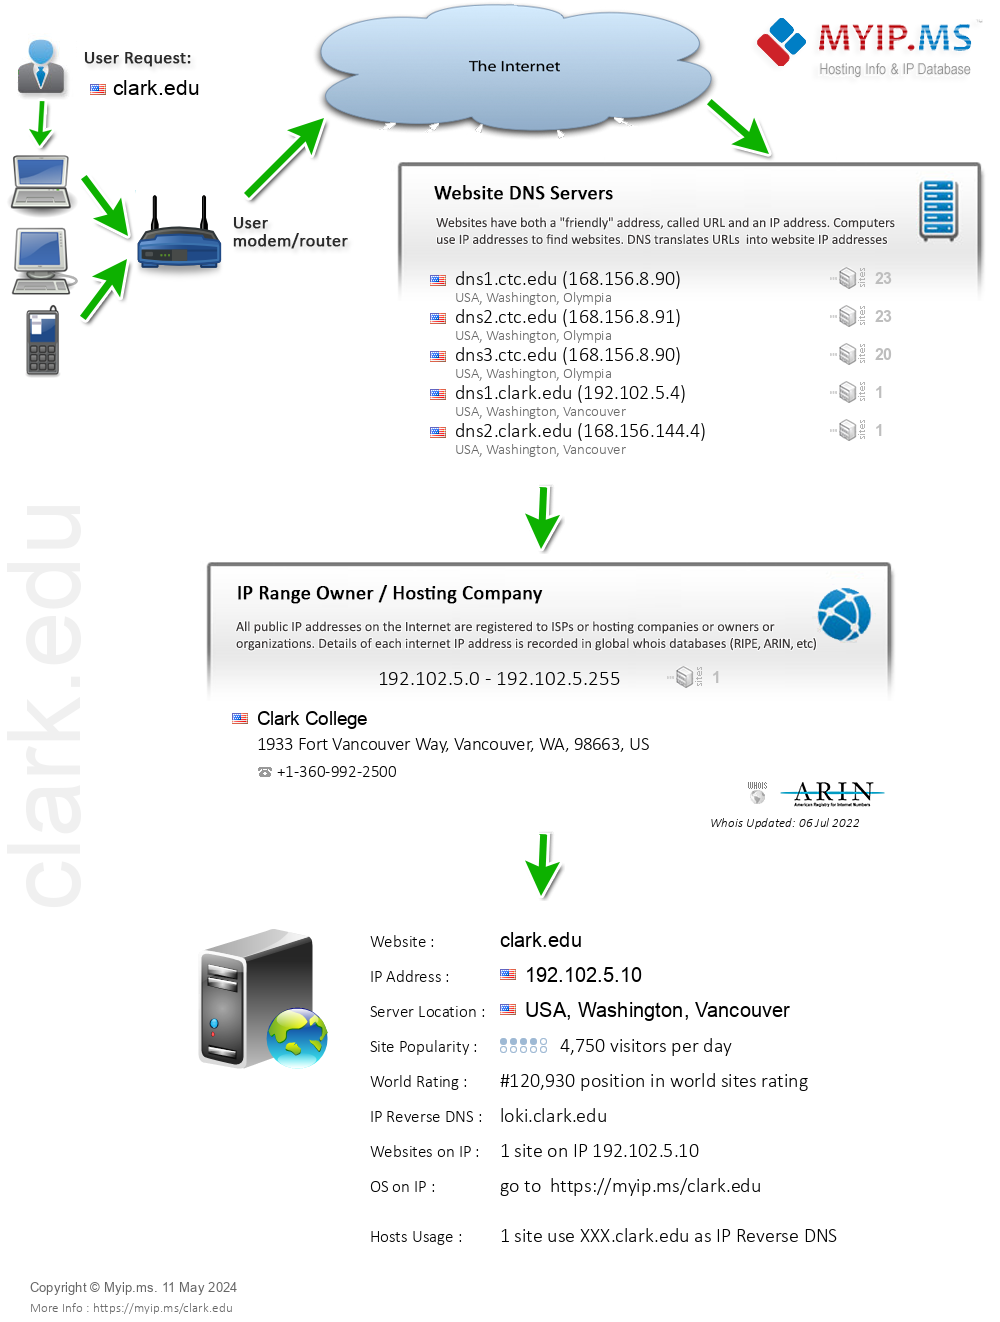 Clark.edu - Website Hosting Visual IP Diagram